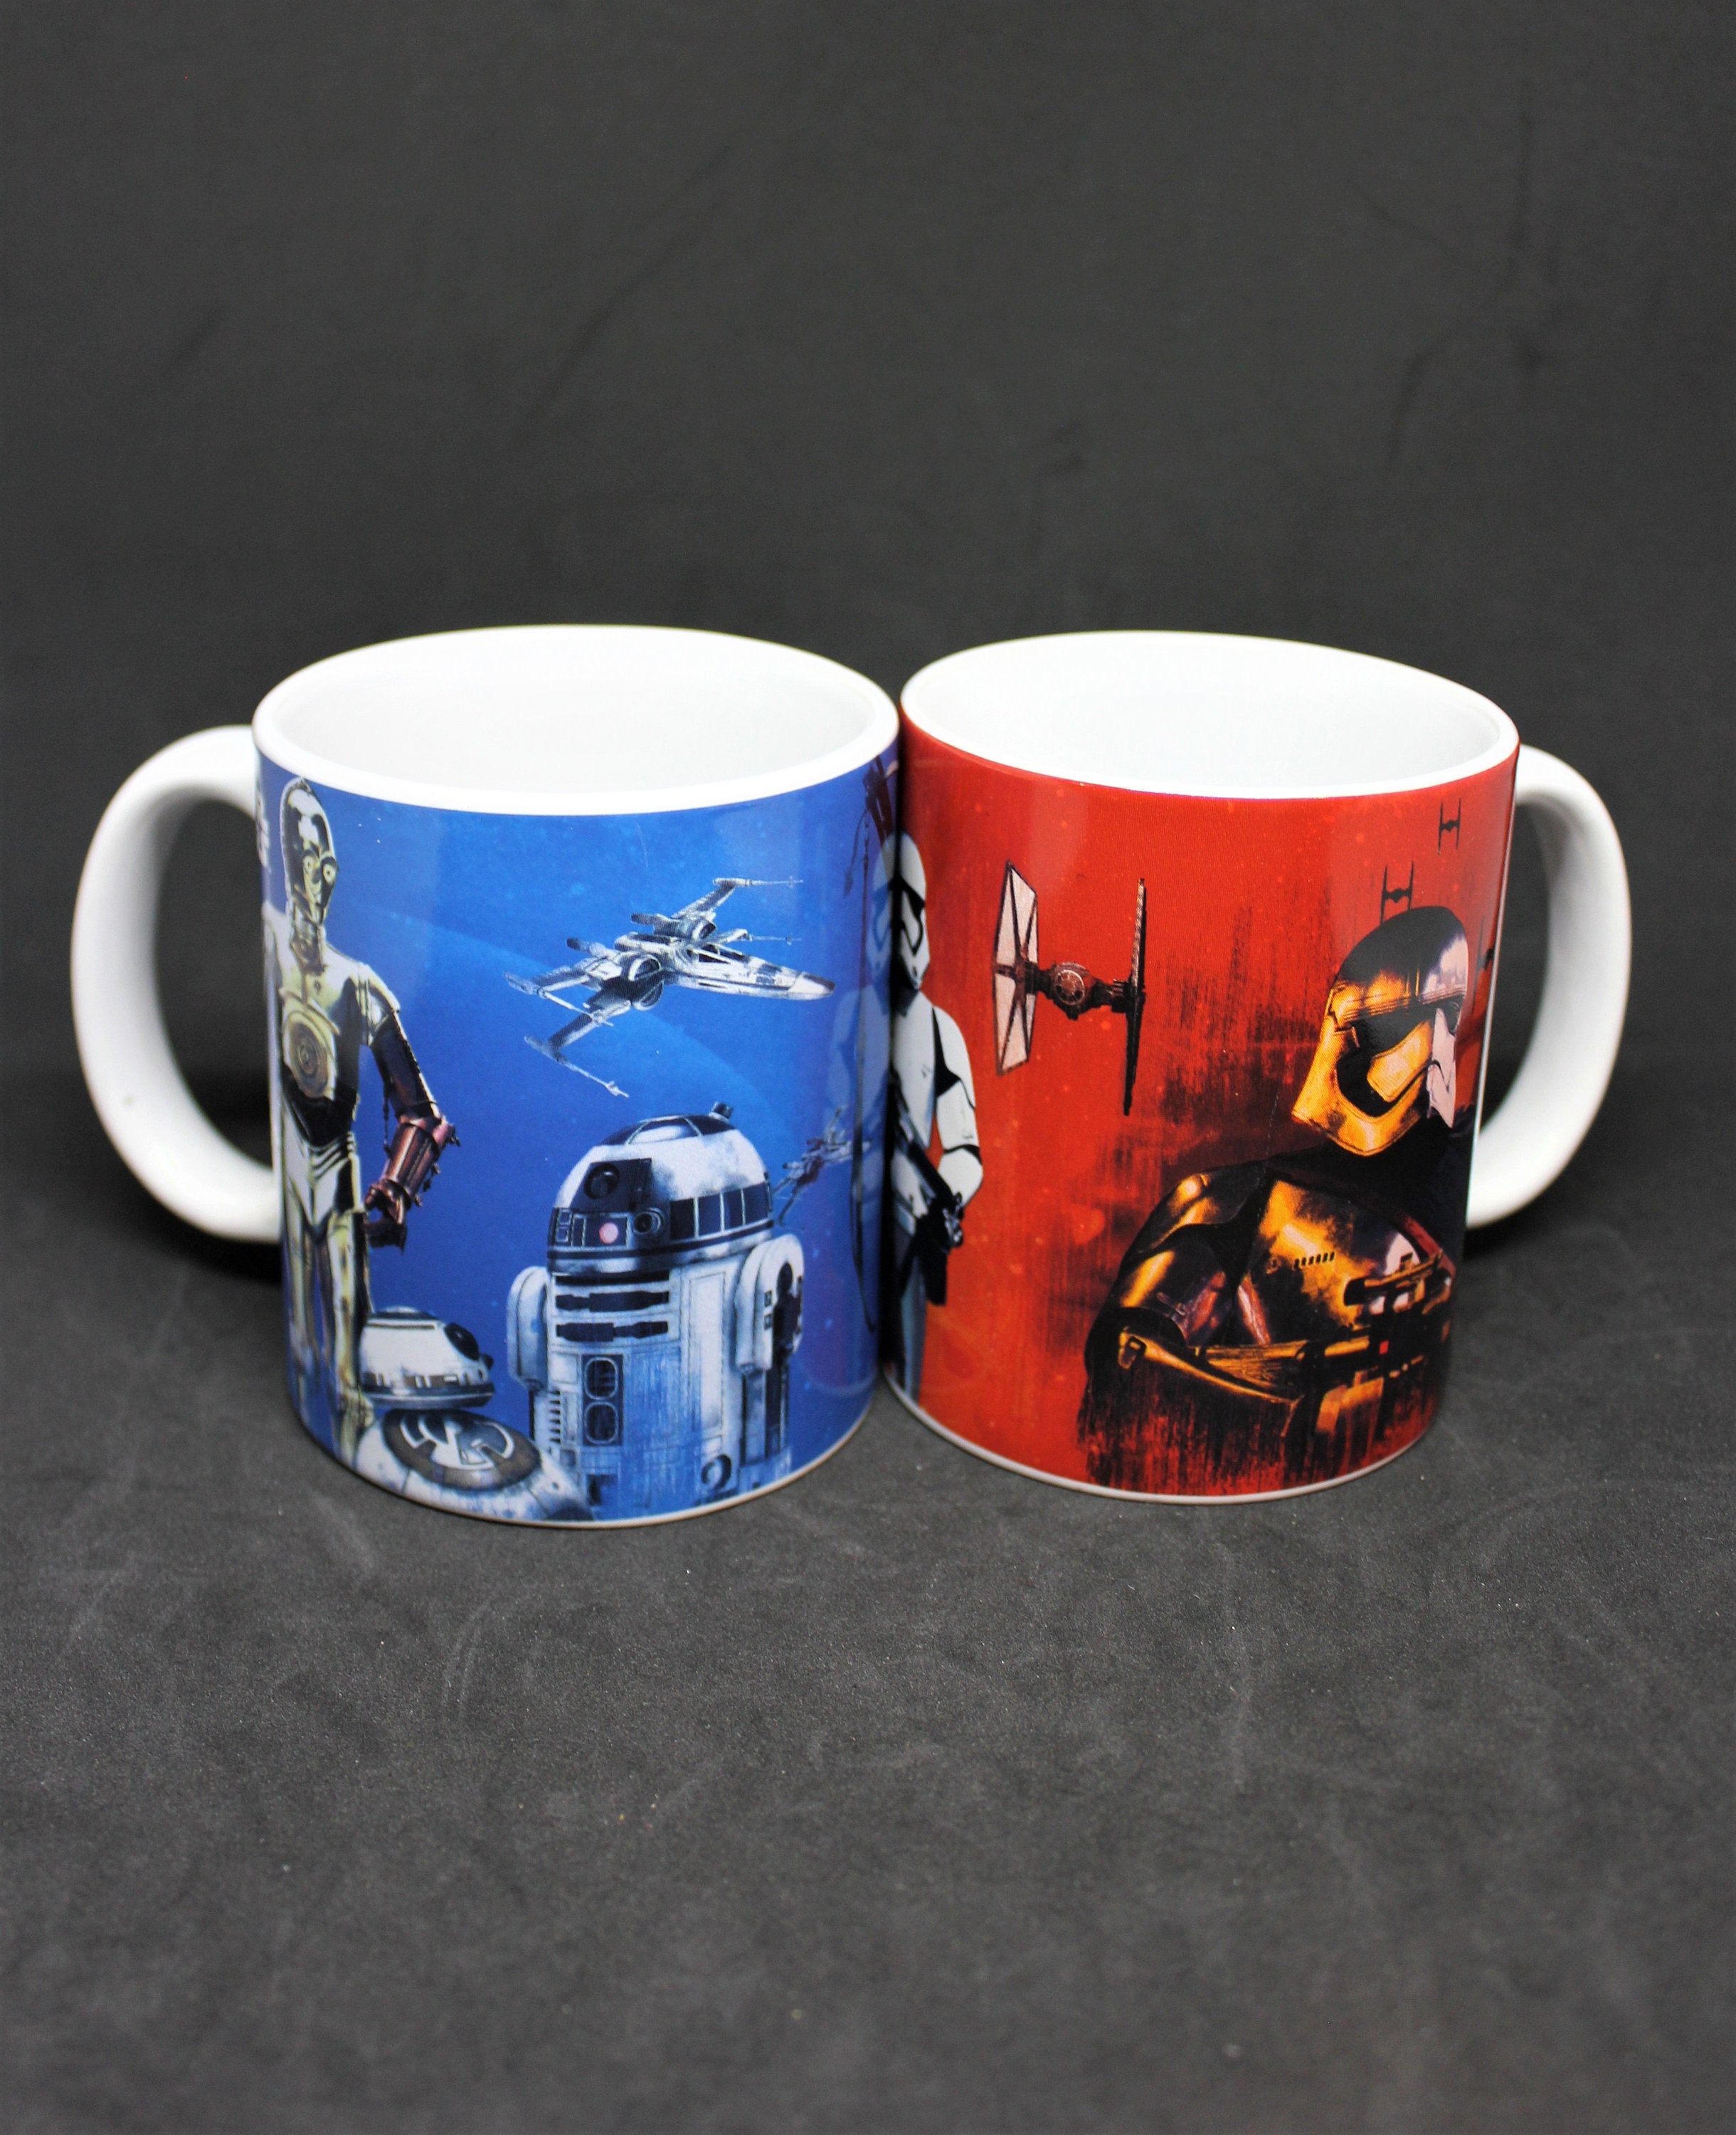 Star Wars Parodic Mug with Blue handle and Blue interior - R2-D2 (Funny  Star Wars Parody - High Quality Mug - Ref : 382)